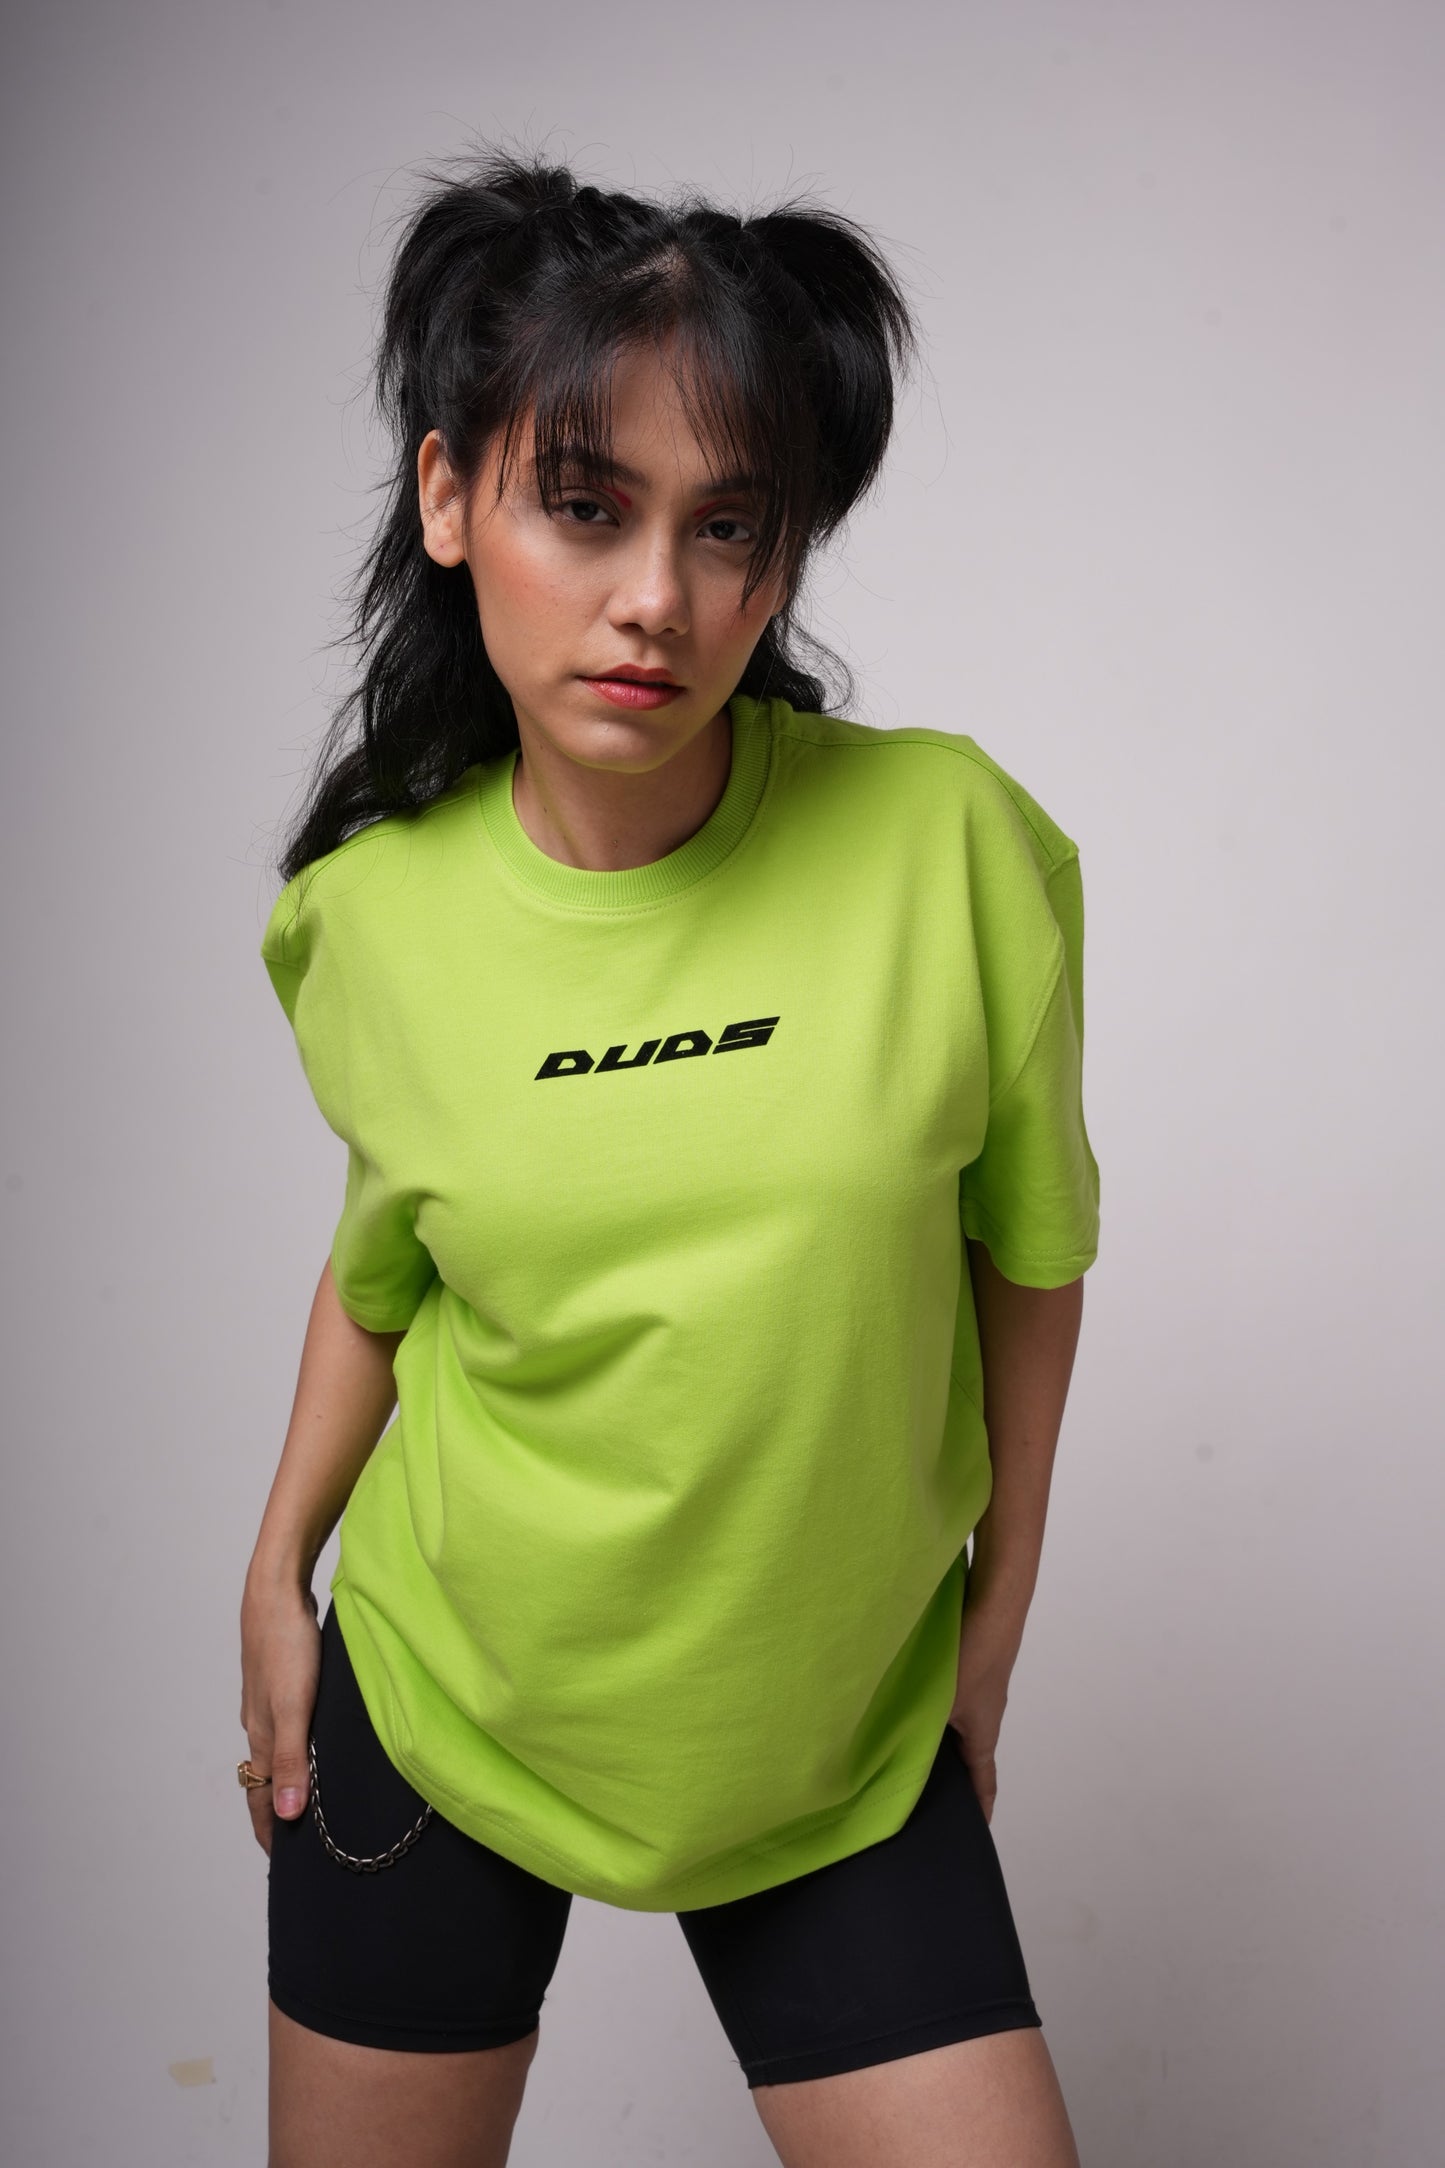 Don't Smoke Over-Sized T-Shirt (Neon Green) - Wearduds